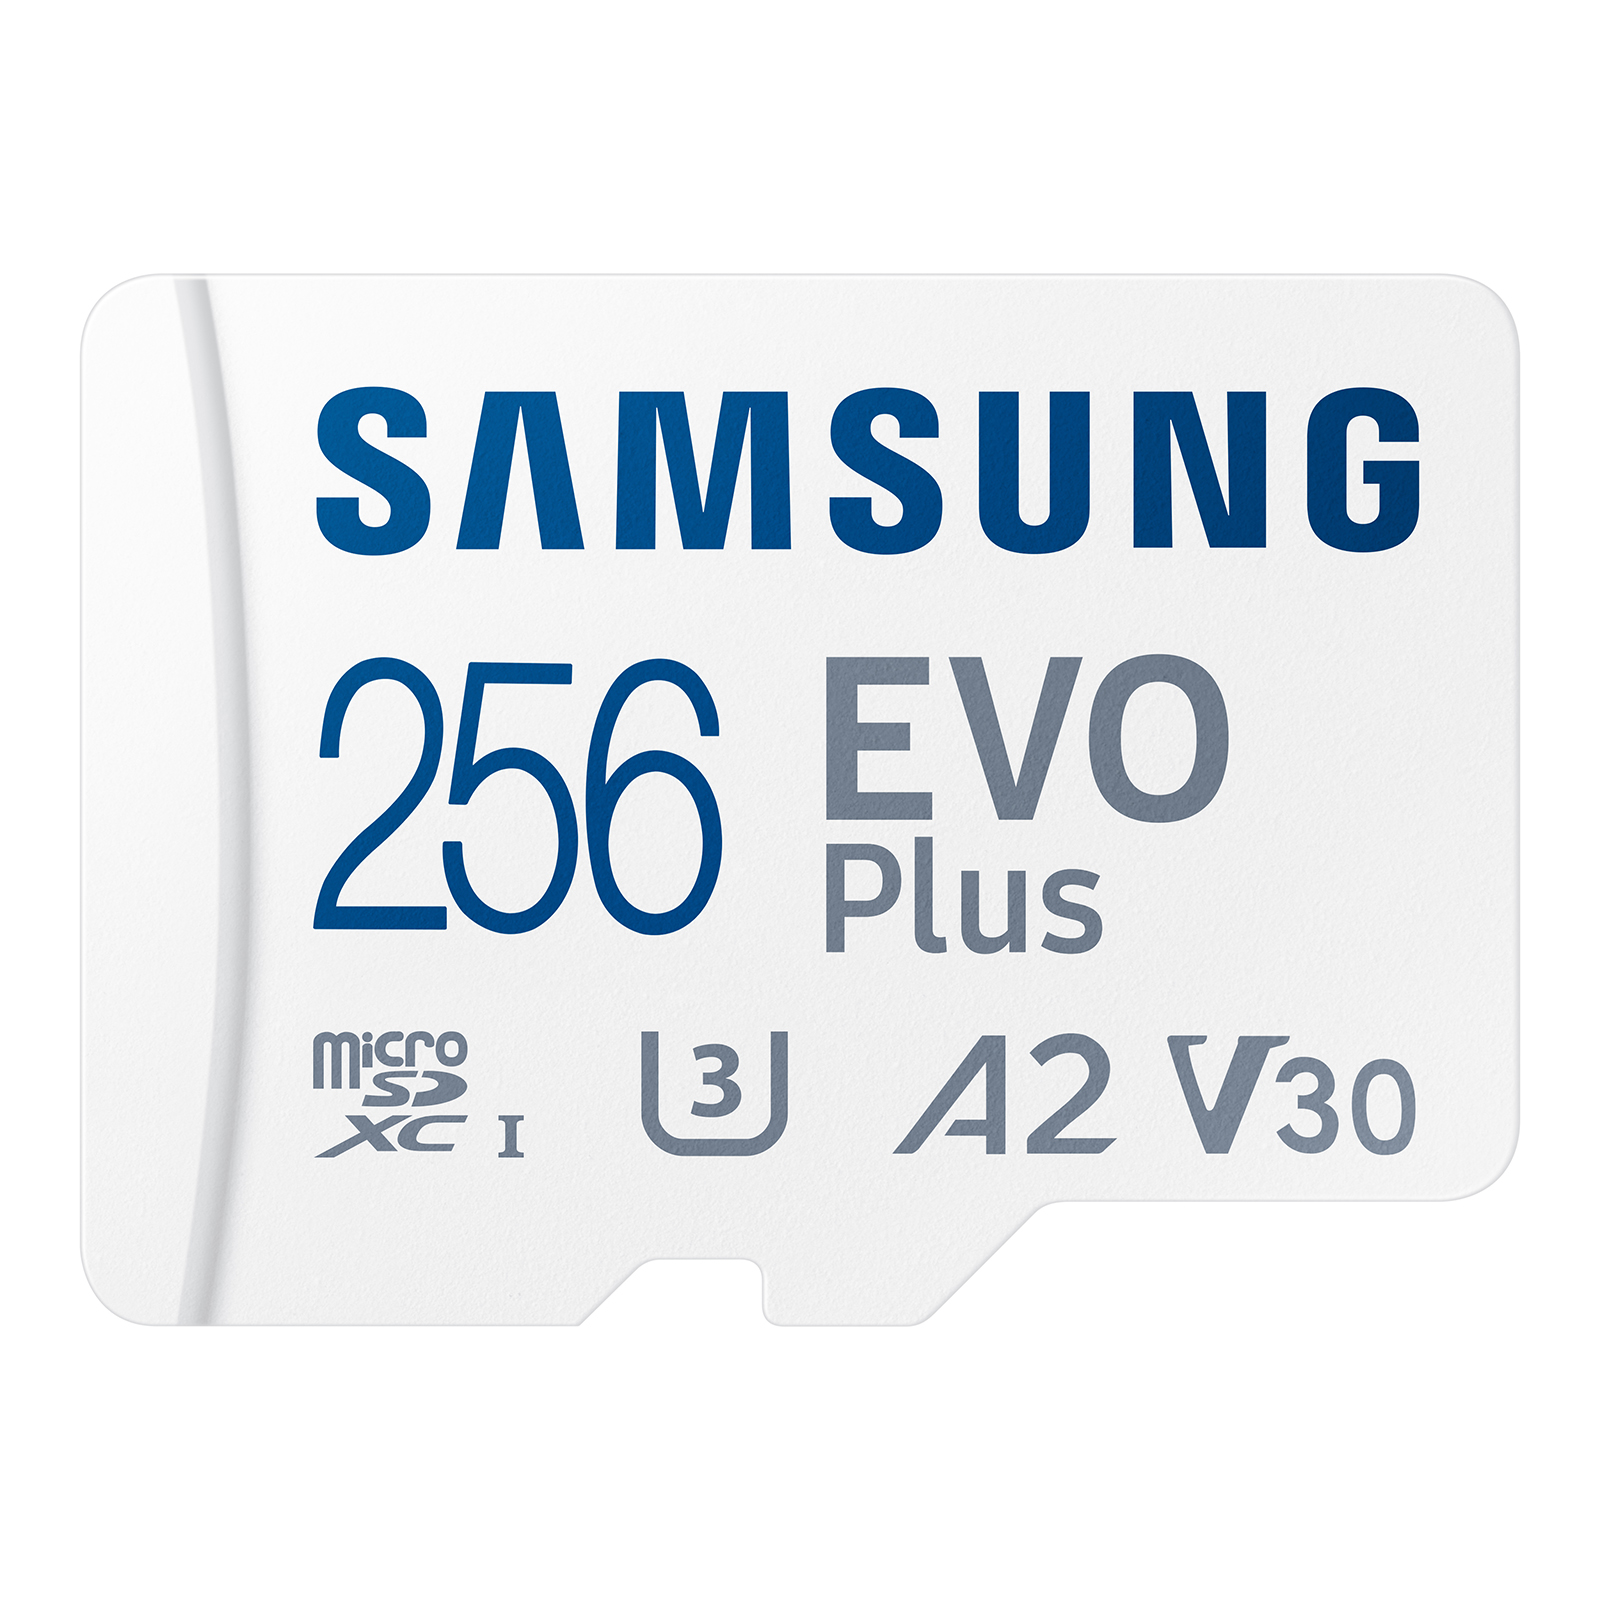 Hovedgade Prelude Uplifted Samsung microSD EVO Plus (256GB) | ITGマーケティング - Samsung SSD / microSD  の国内正規品取扱代理店 - 法人直販サイト ITG Direct